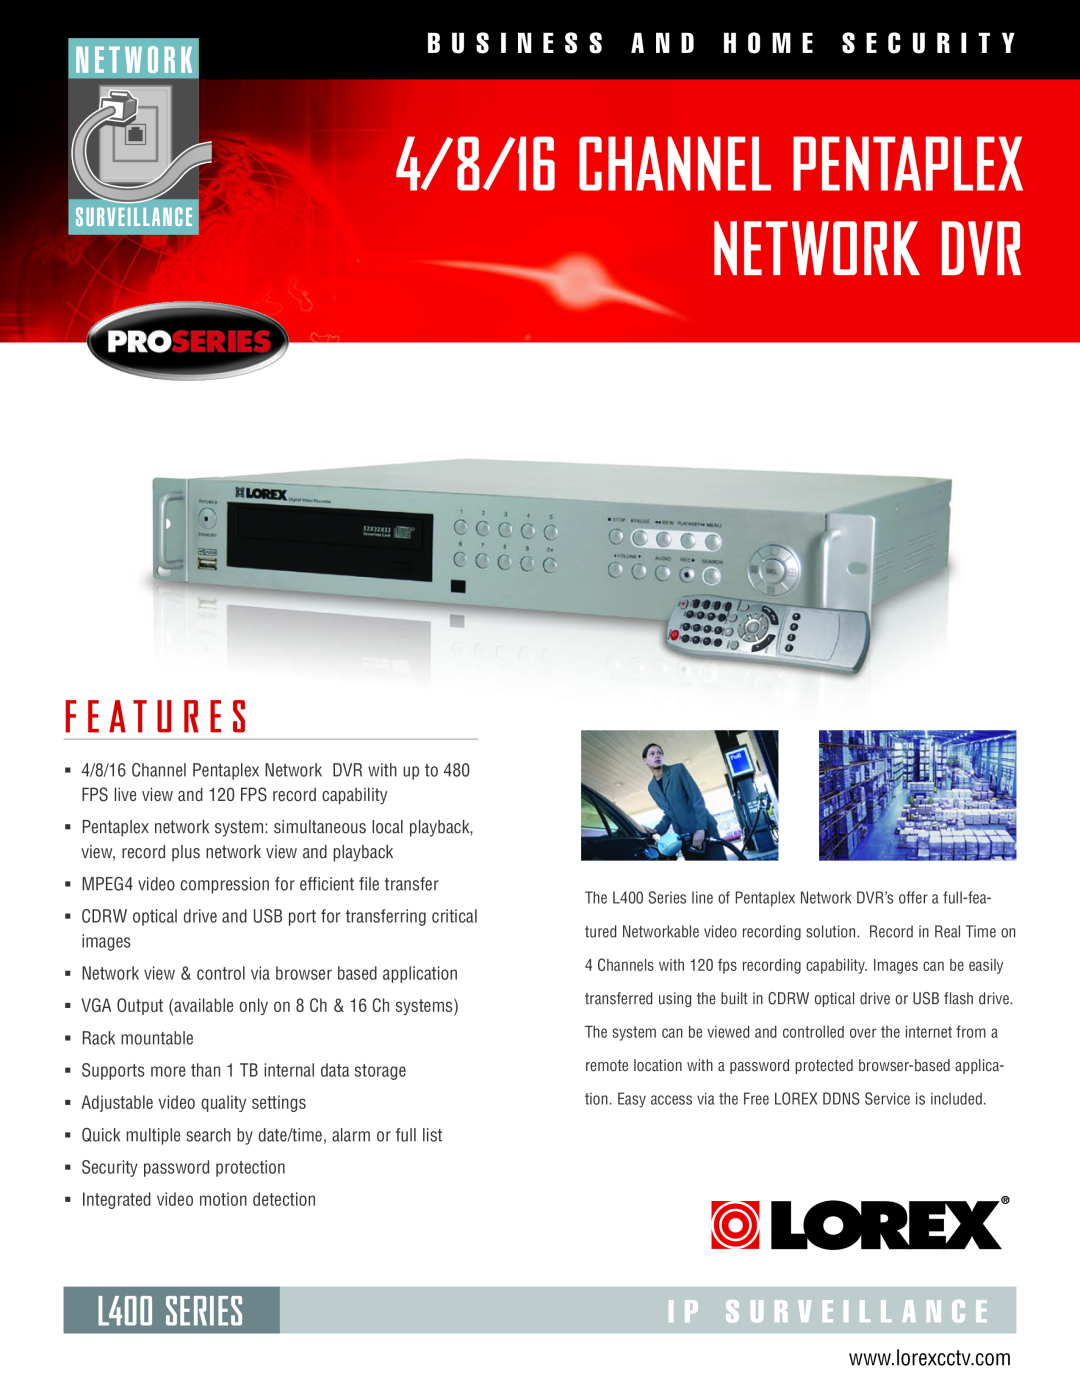 LOREX Technology L400 Series manual B U S I N E S S A N D H O M E S E C U R I T Y, 4/8/16 Channel Pentaplex Network DVR 